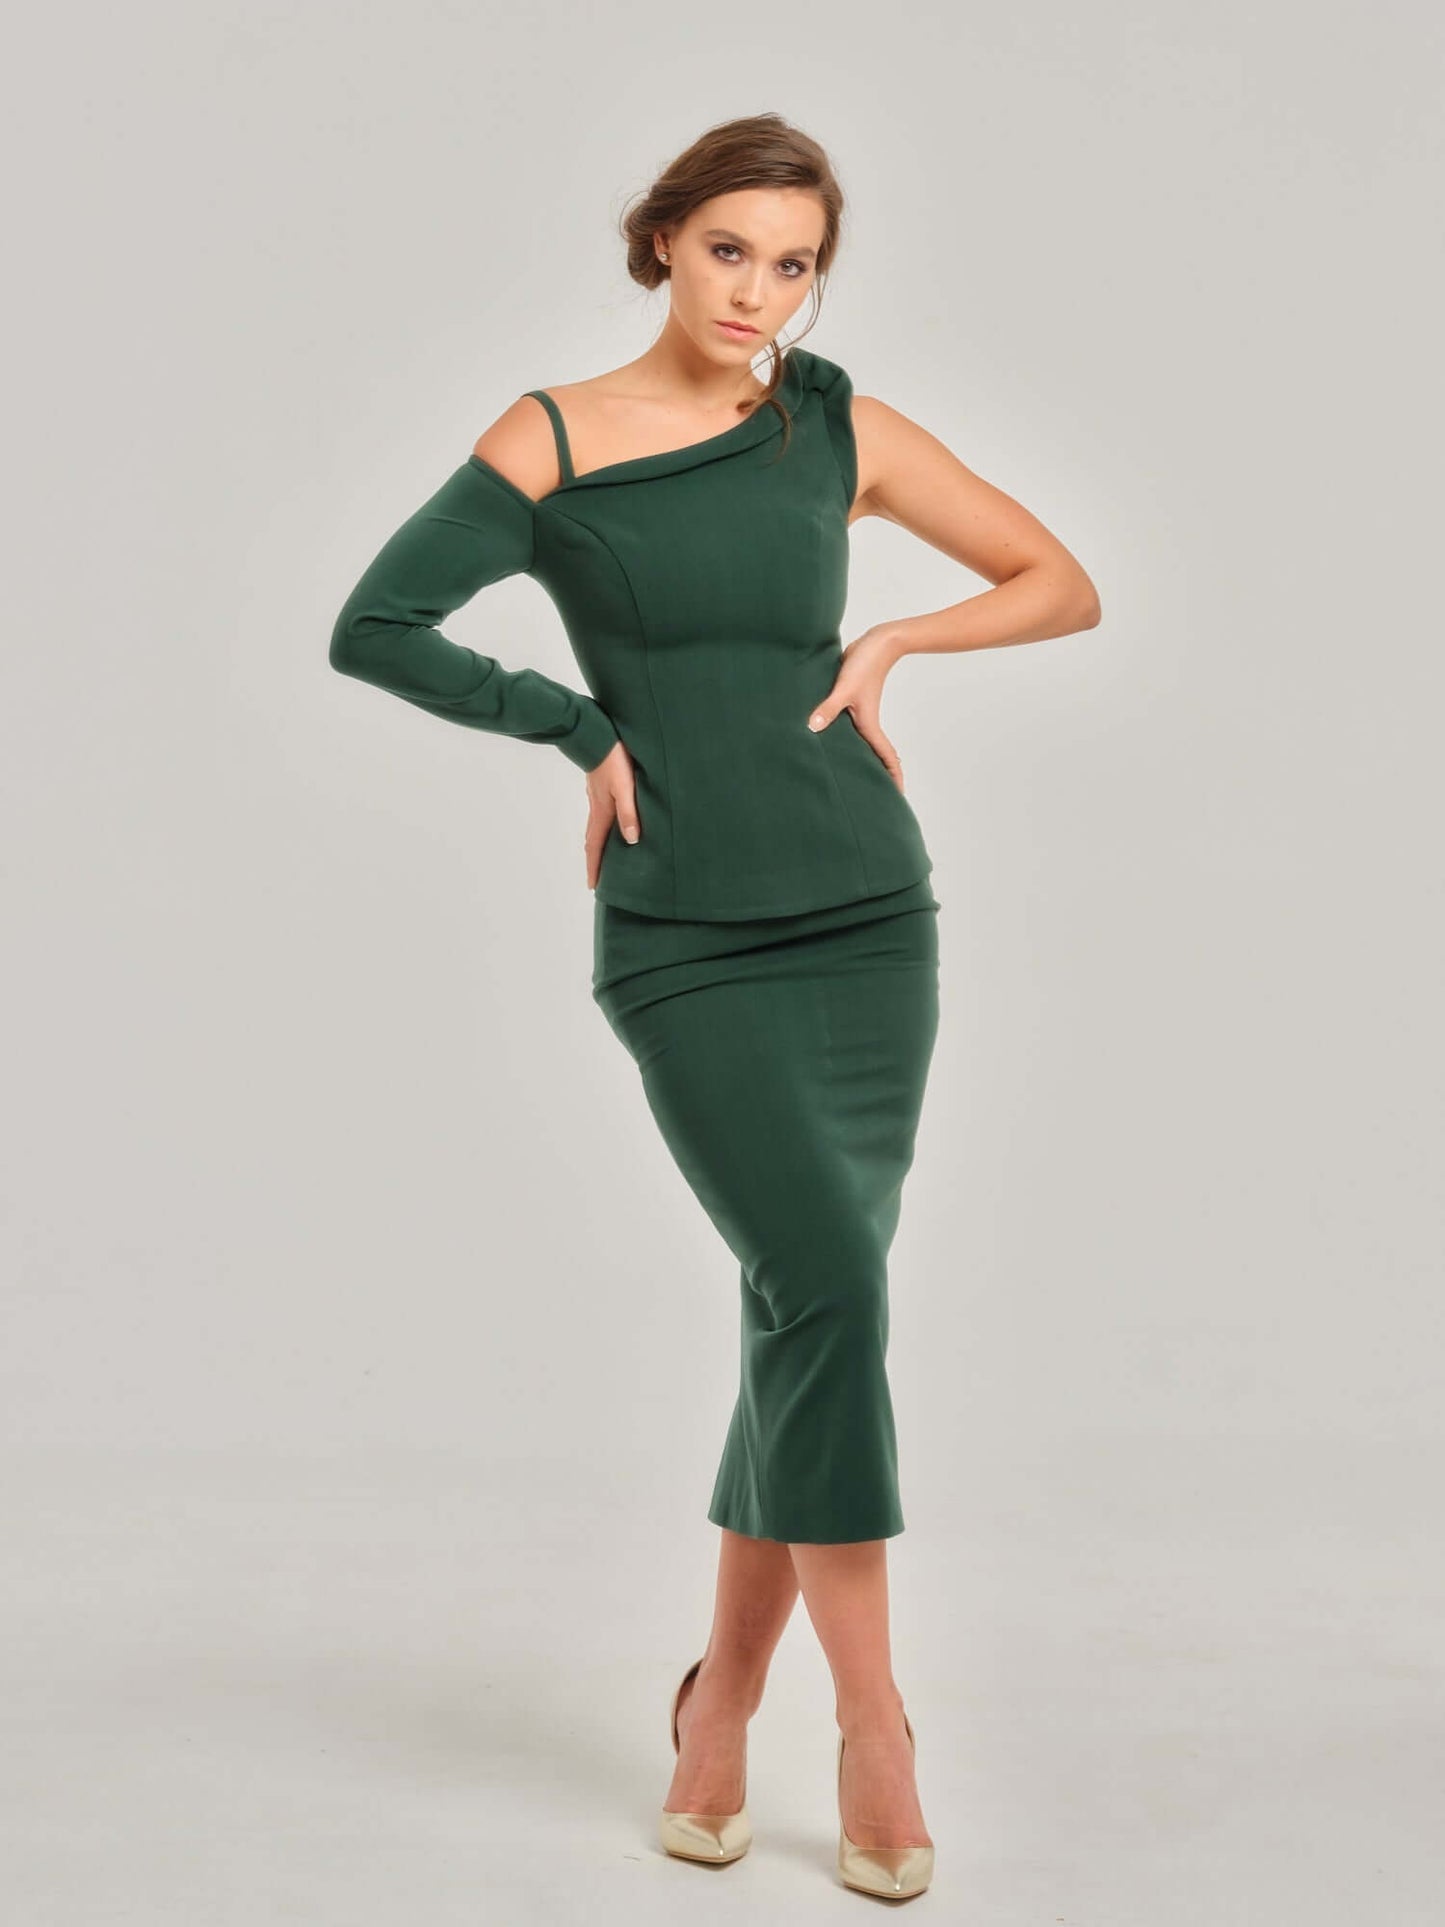 Emerald Dream Asymmetric One-Shoulder Top by Tia Dorraine Women's Luxury Fashion Designer Clothing Brand